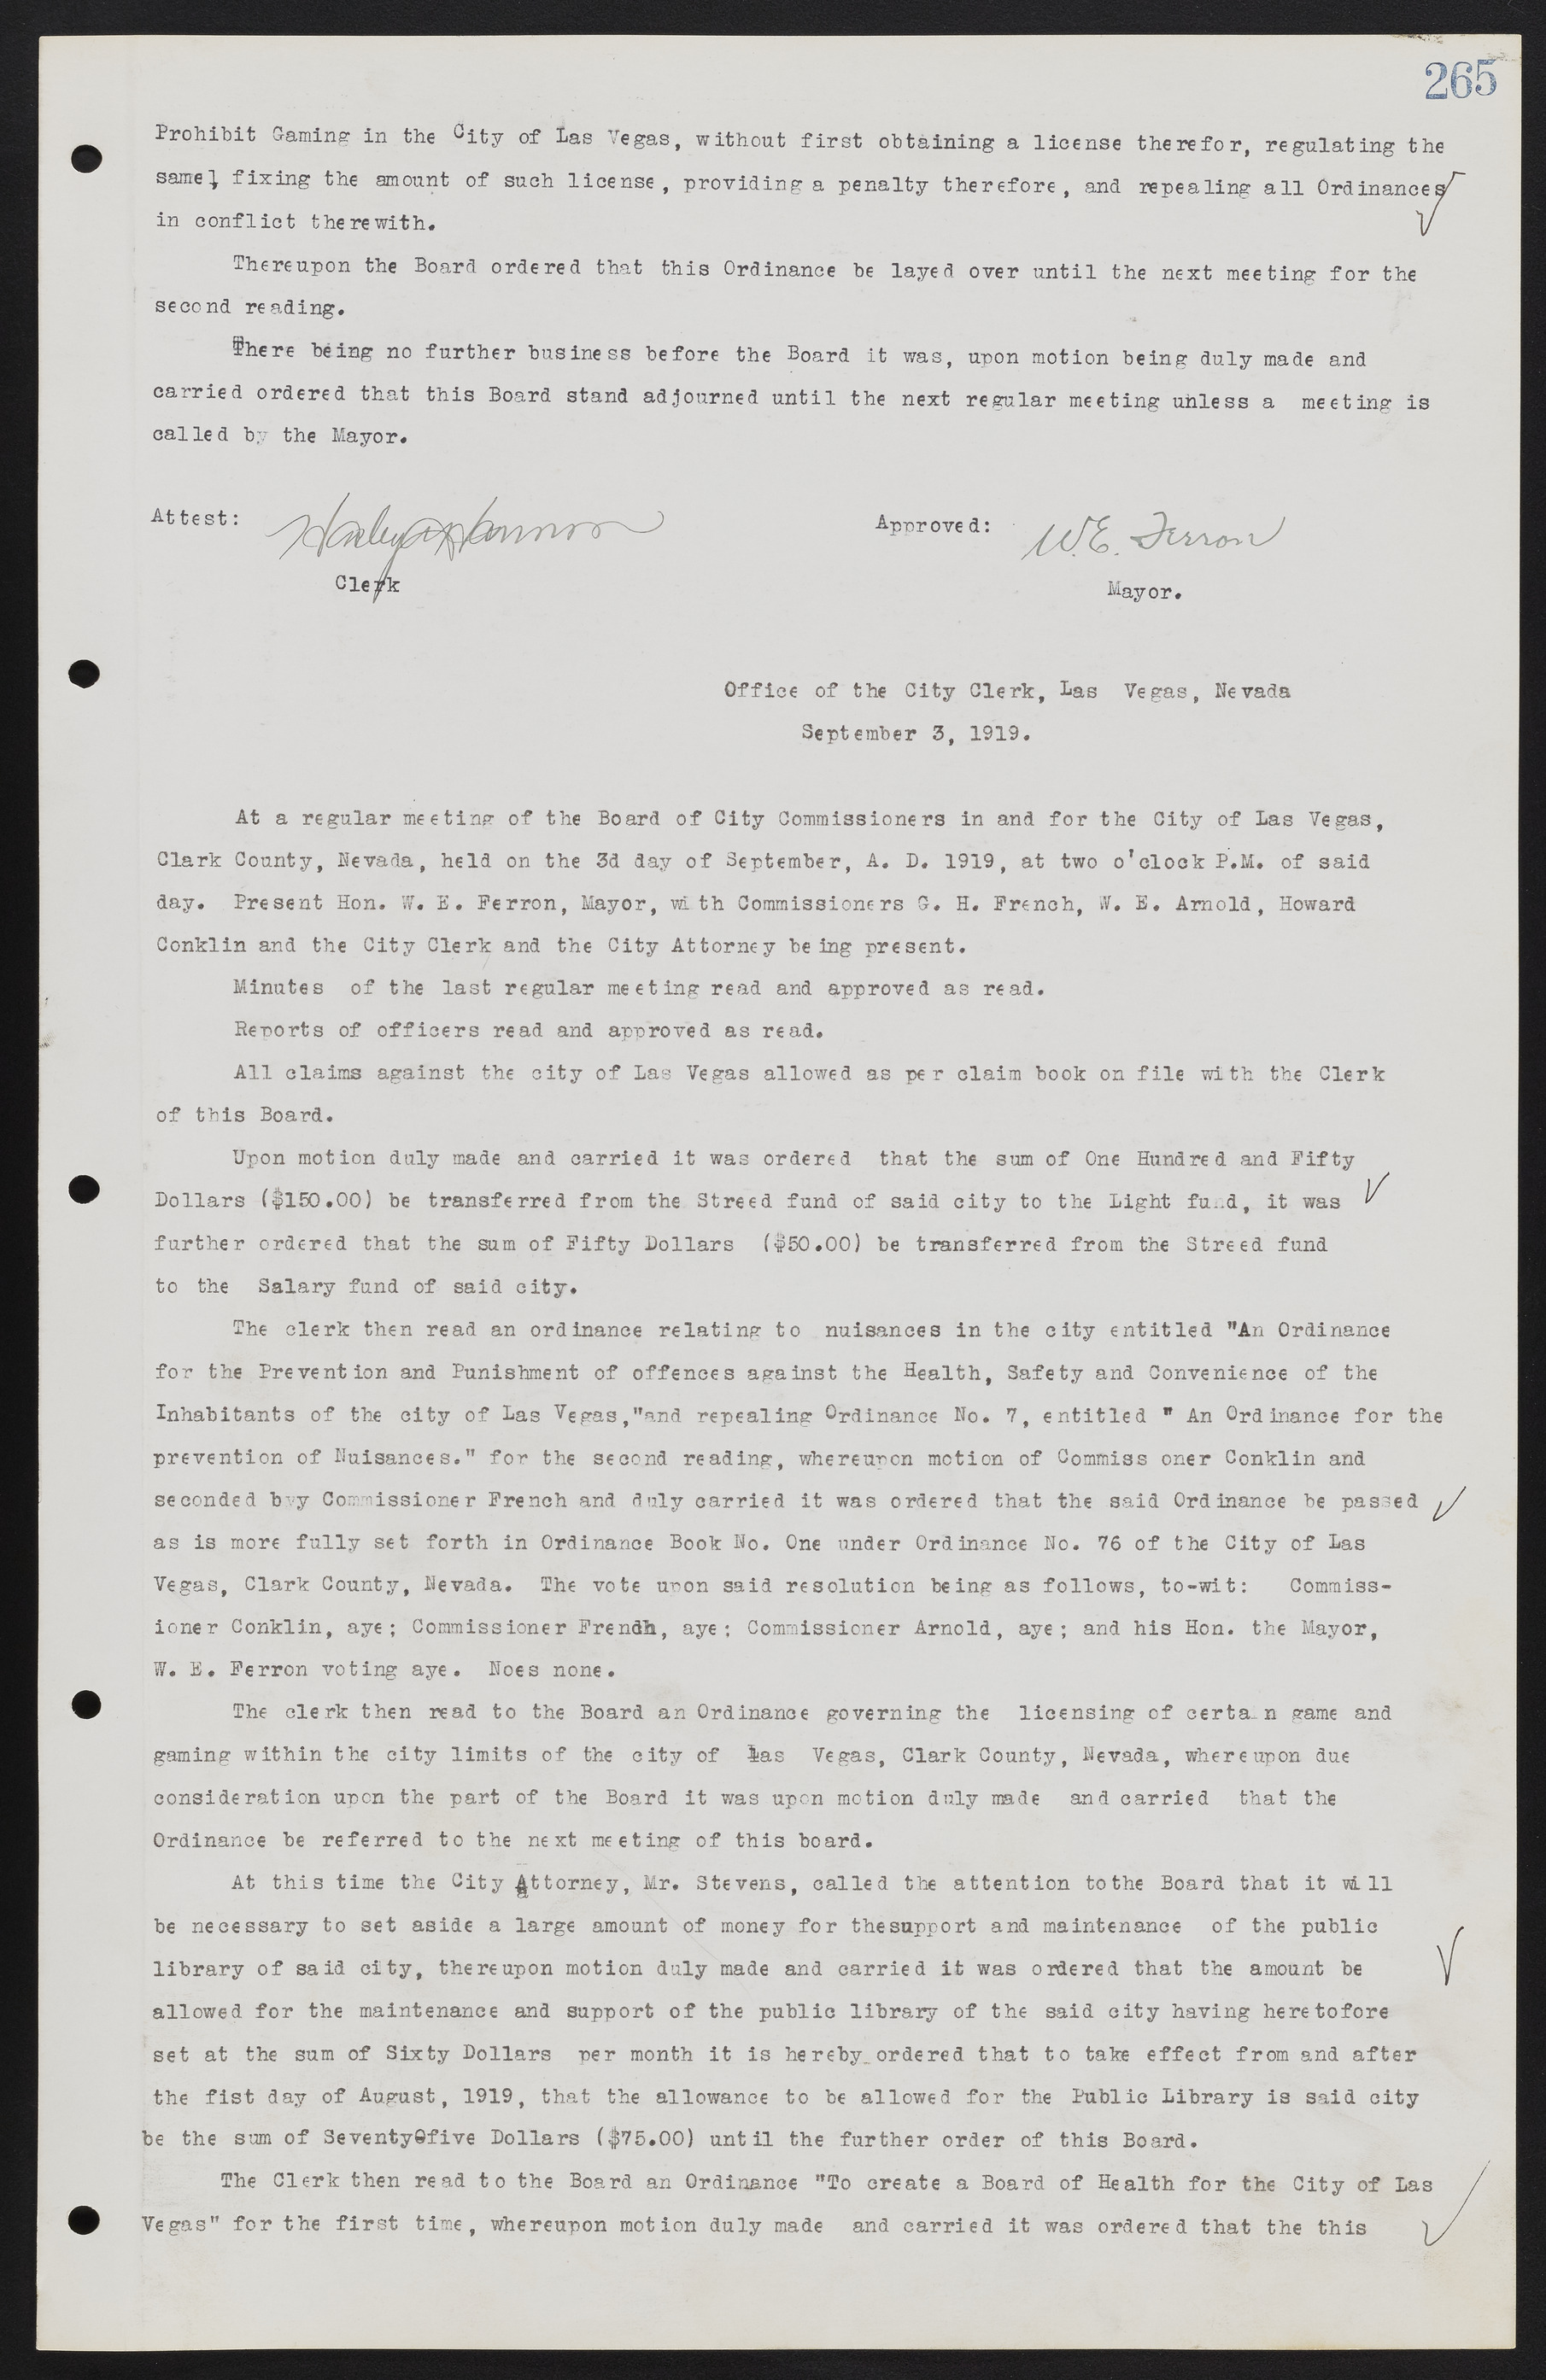 Las Vegas City Commission Minutes, June 22, 1911 to February 7, 1922, lvc000001-281